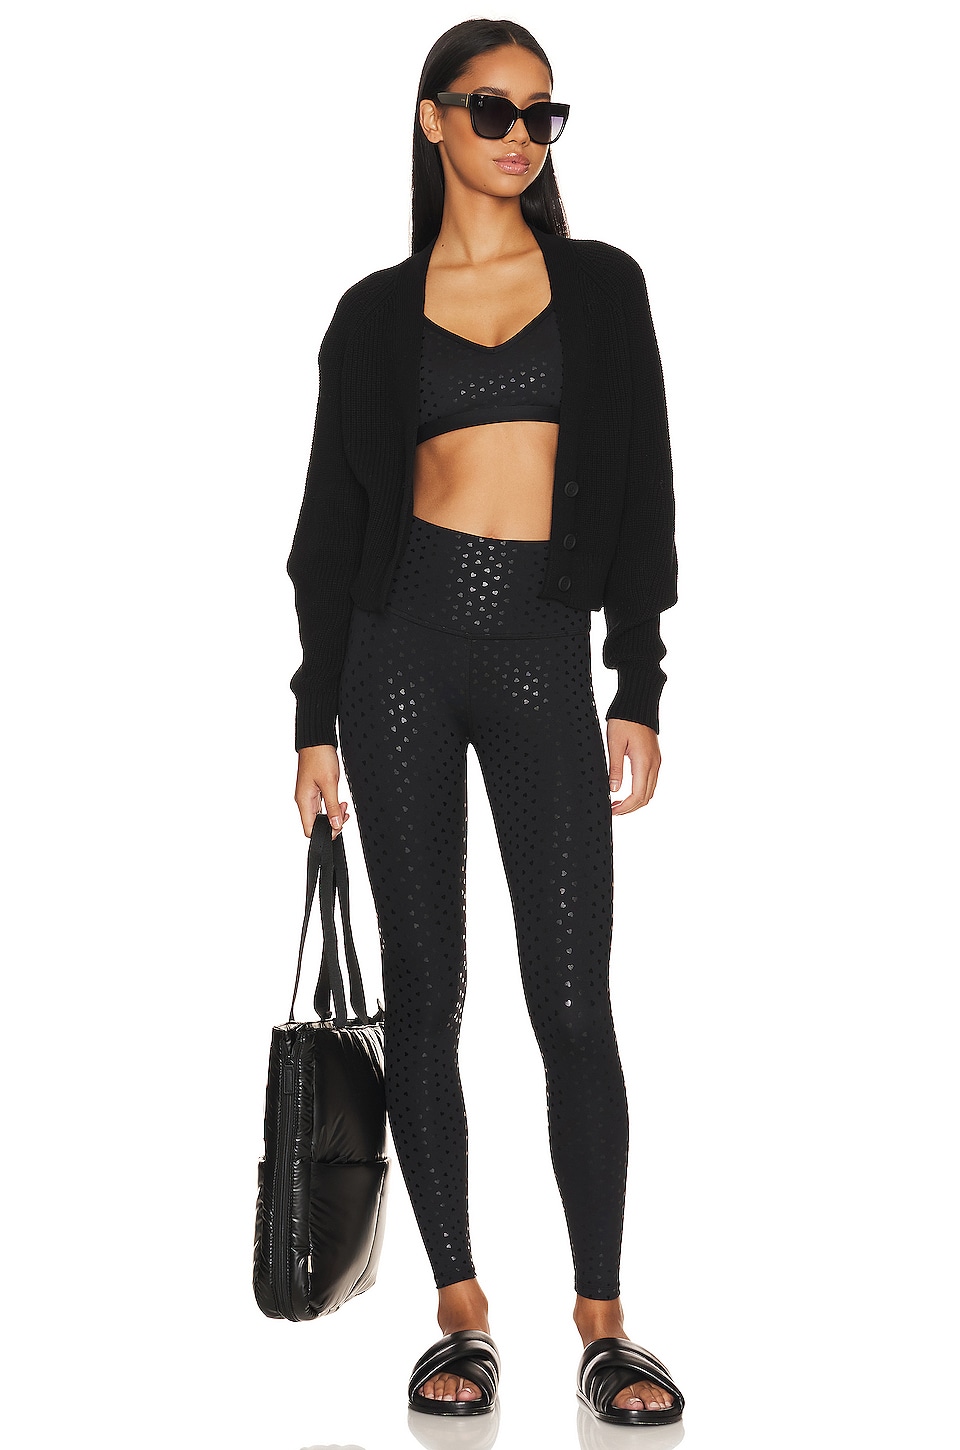 Lorna Jane crop leggings black mesh ruffles xs - $35 - From Christina